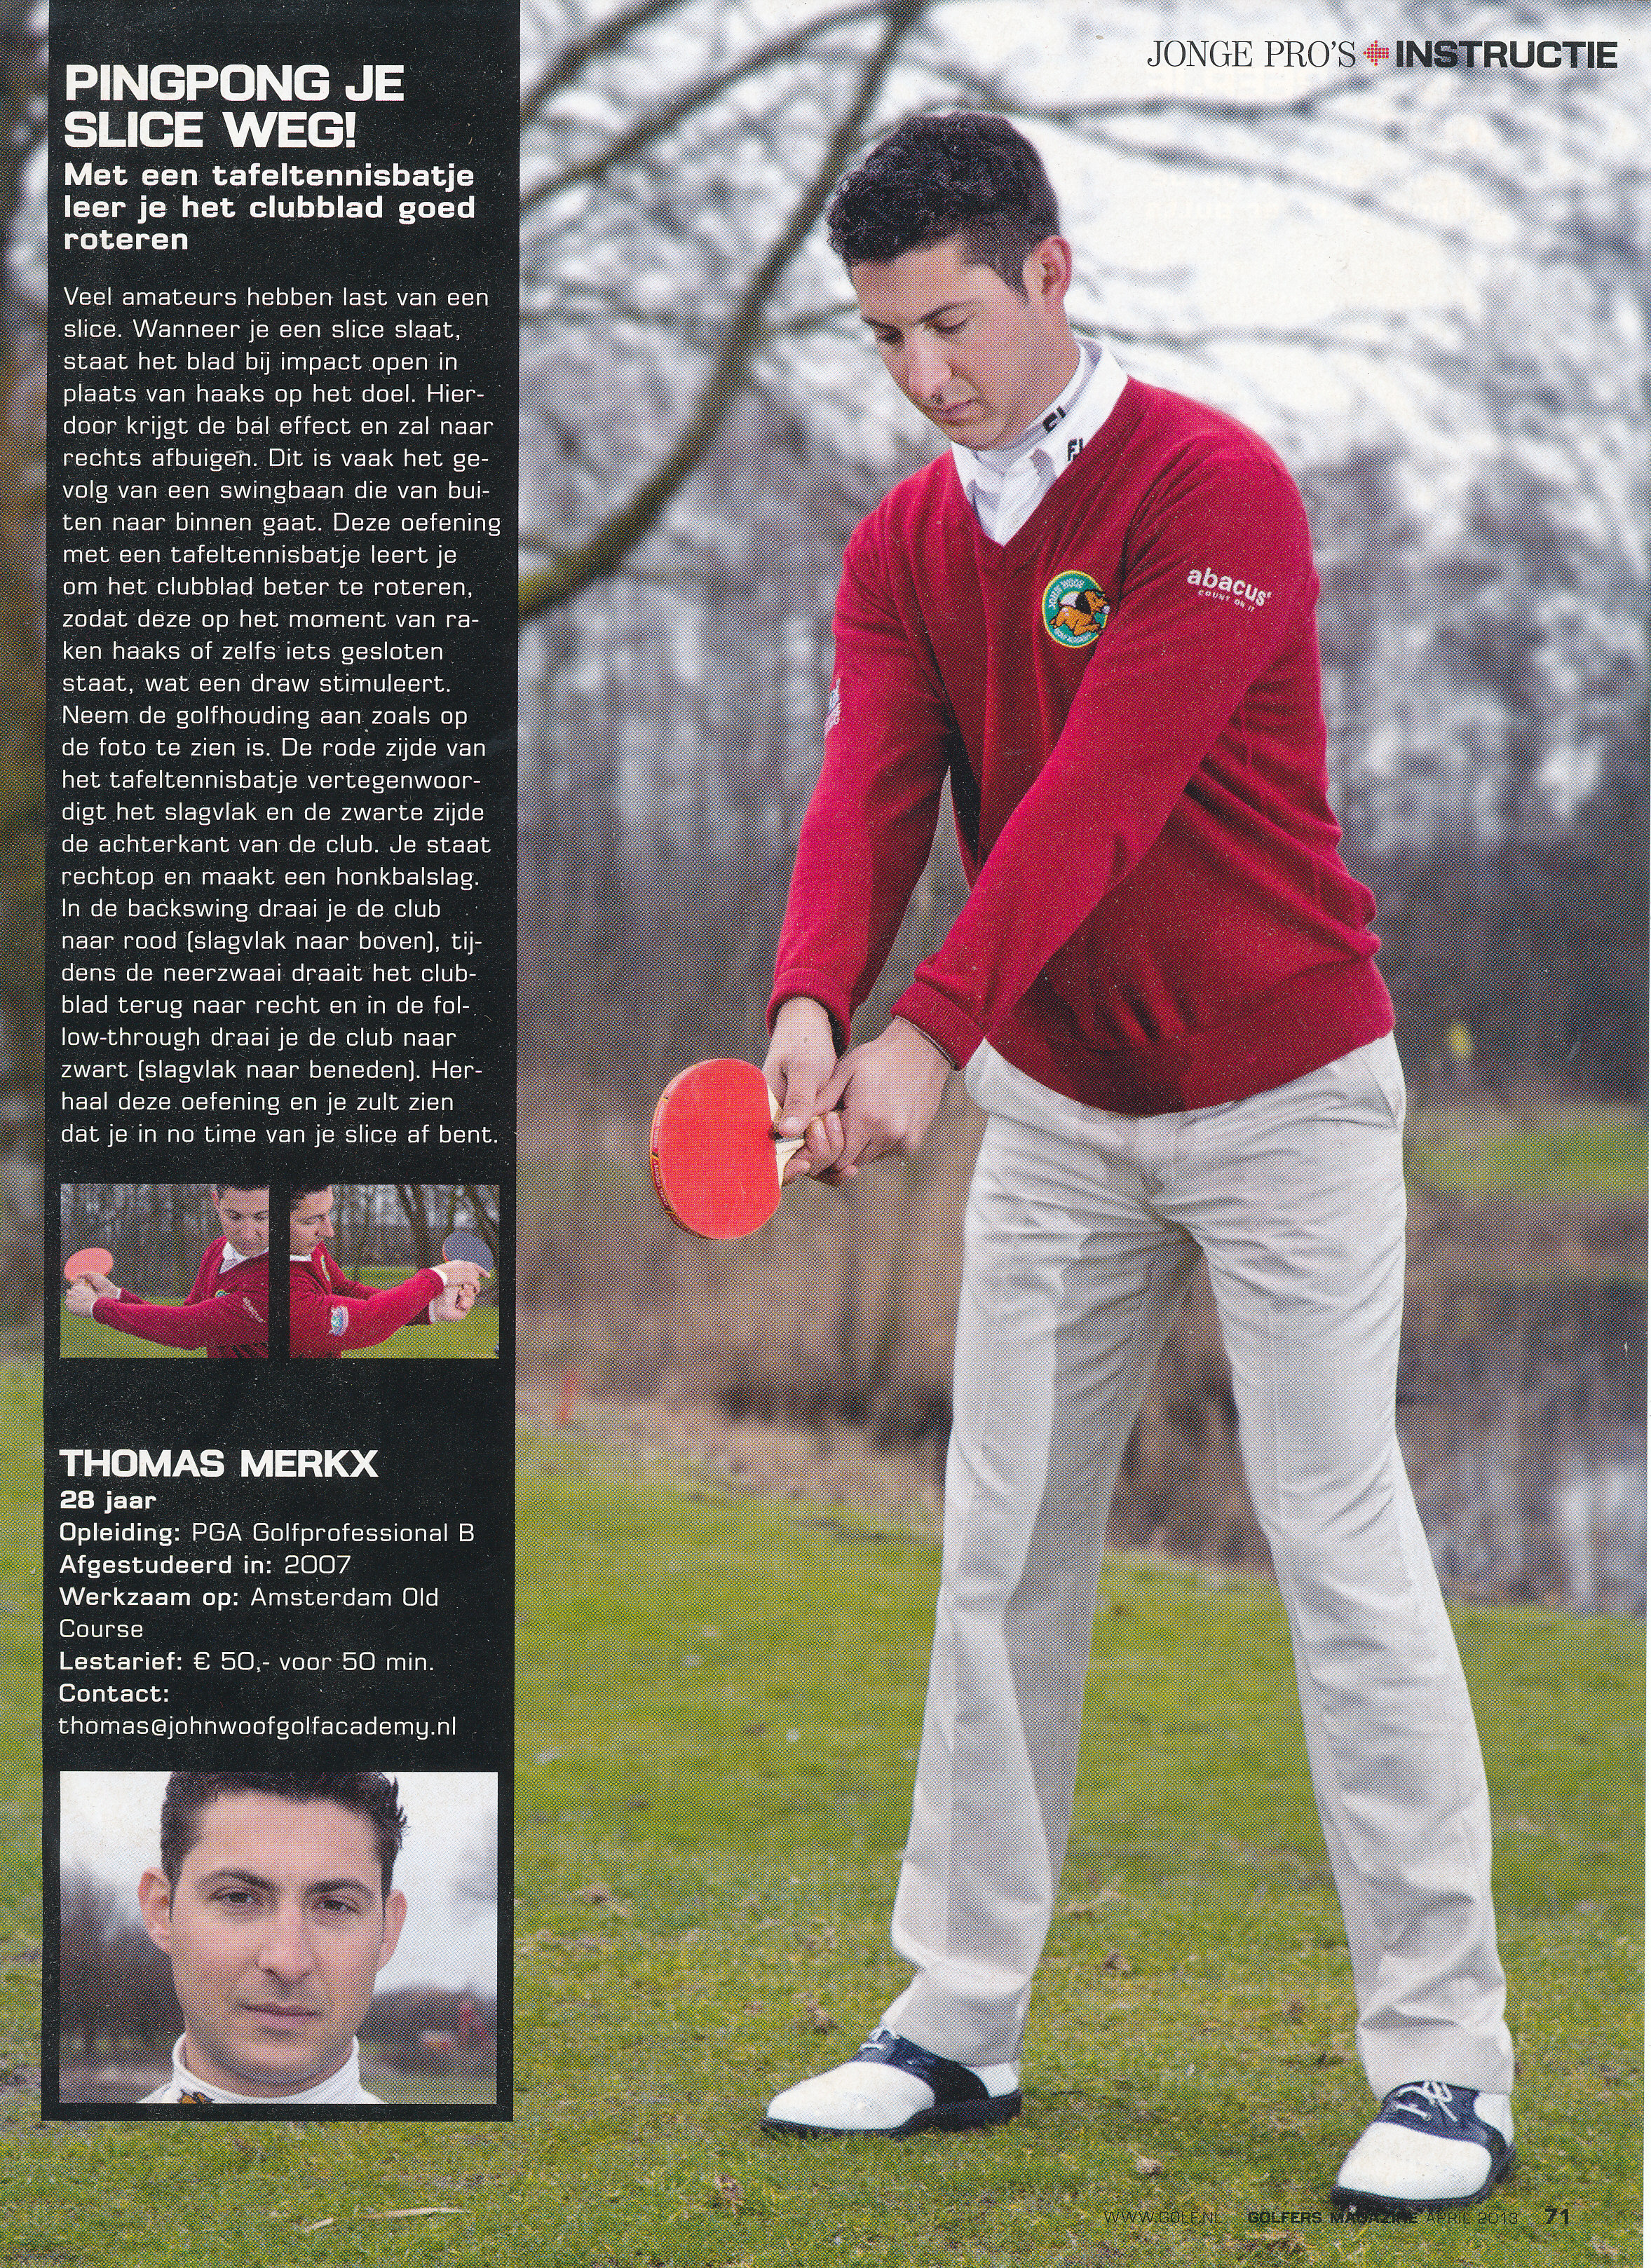 2013 A178 merkx in golf magazine.jpg